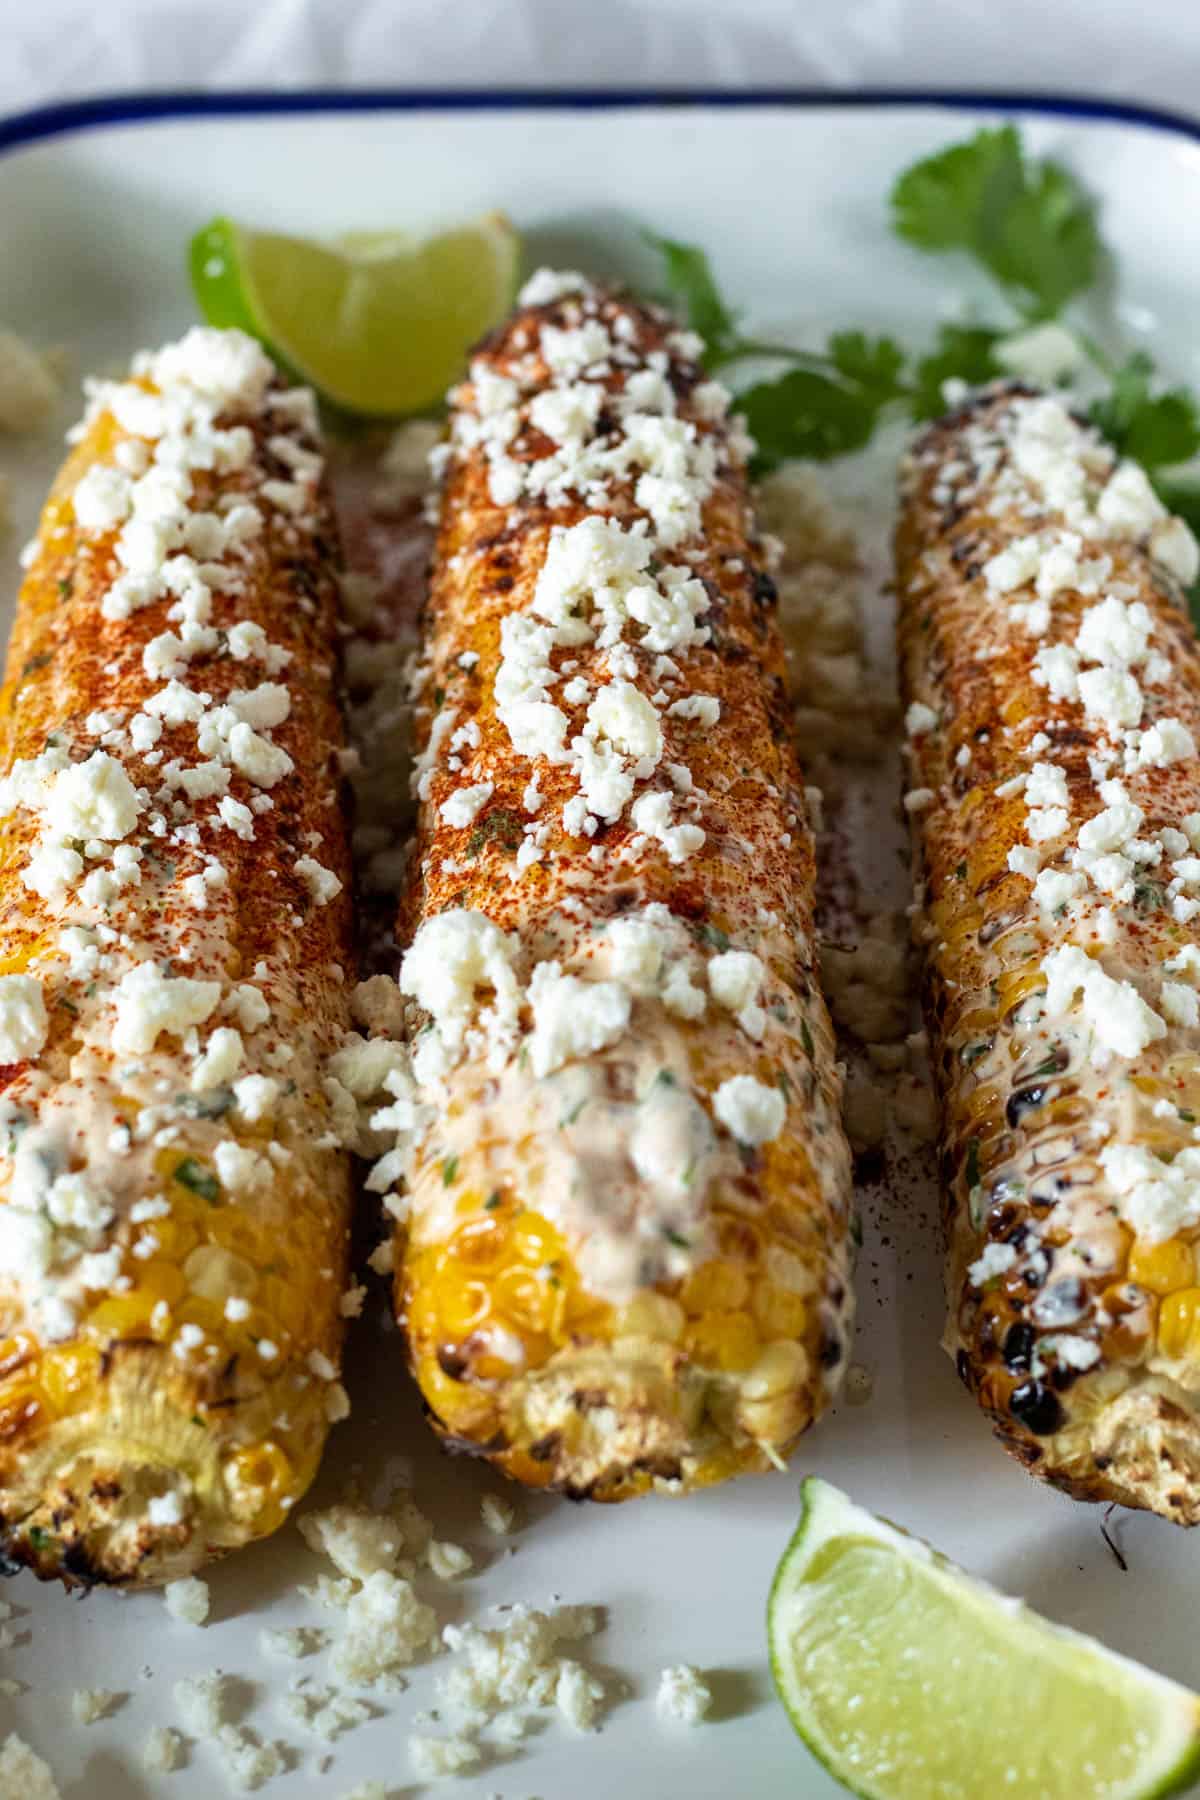 Mexican street corn on serving platter.